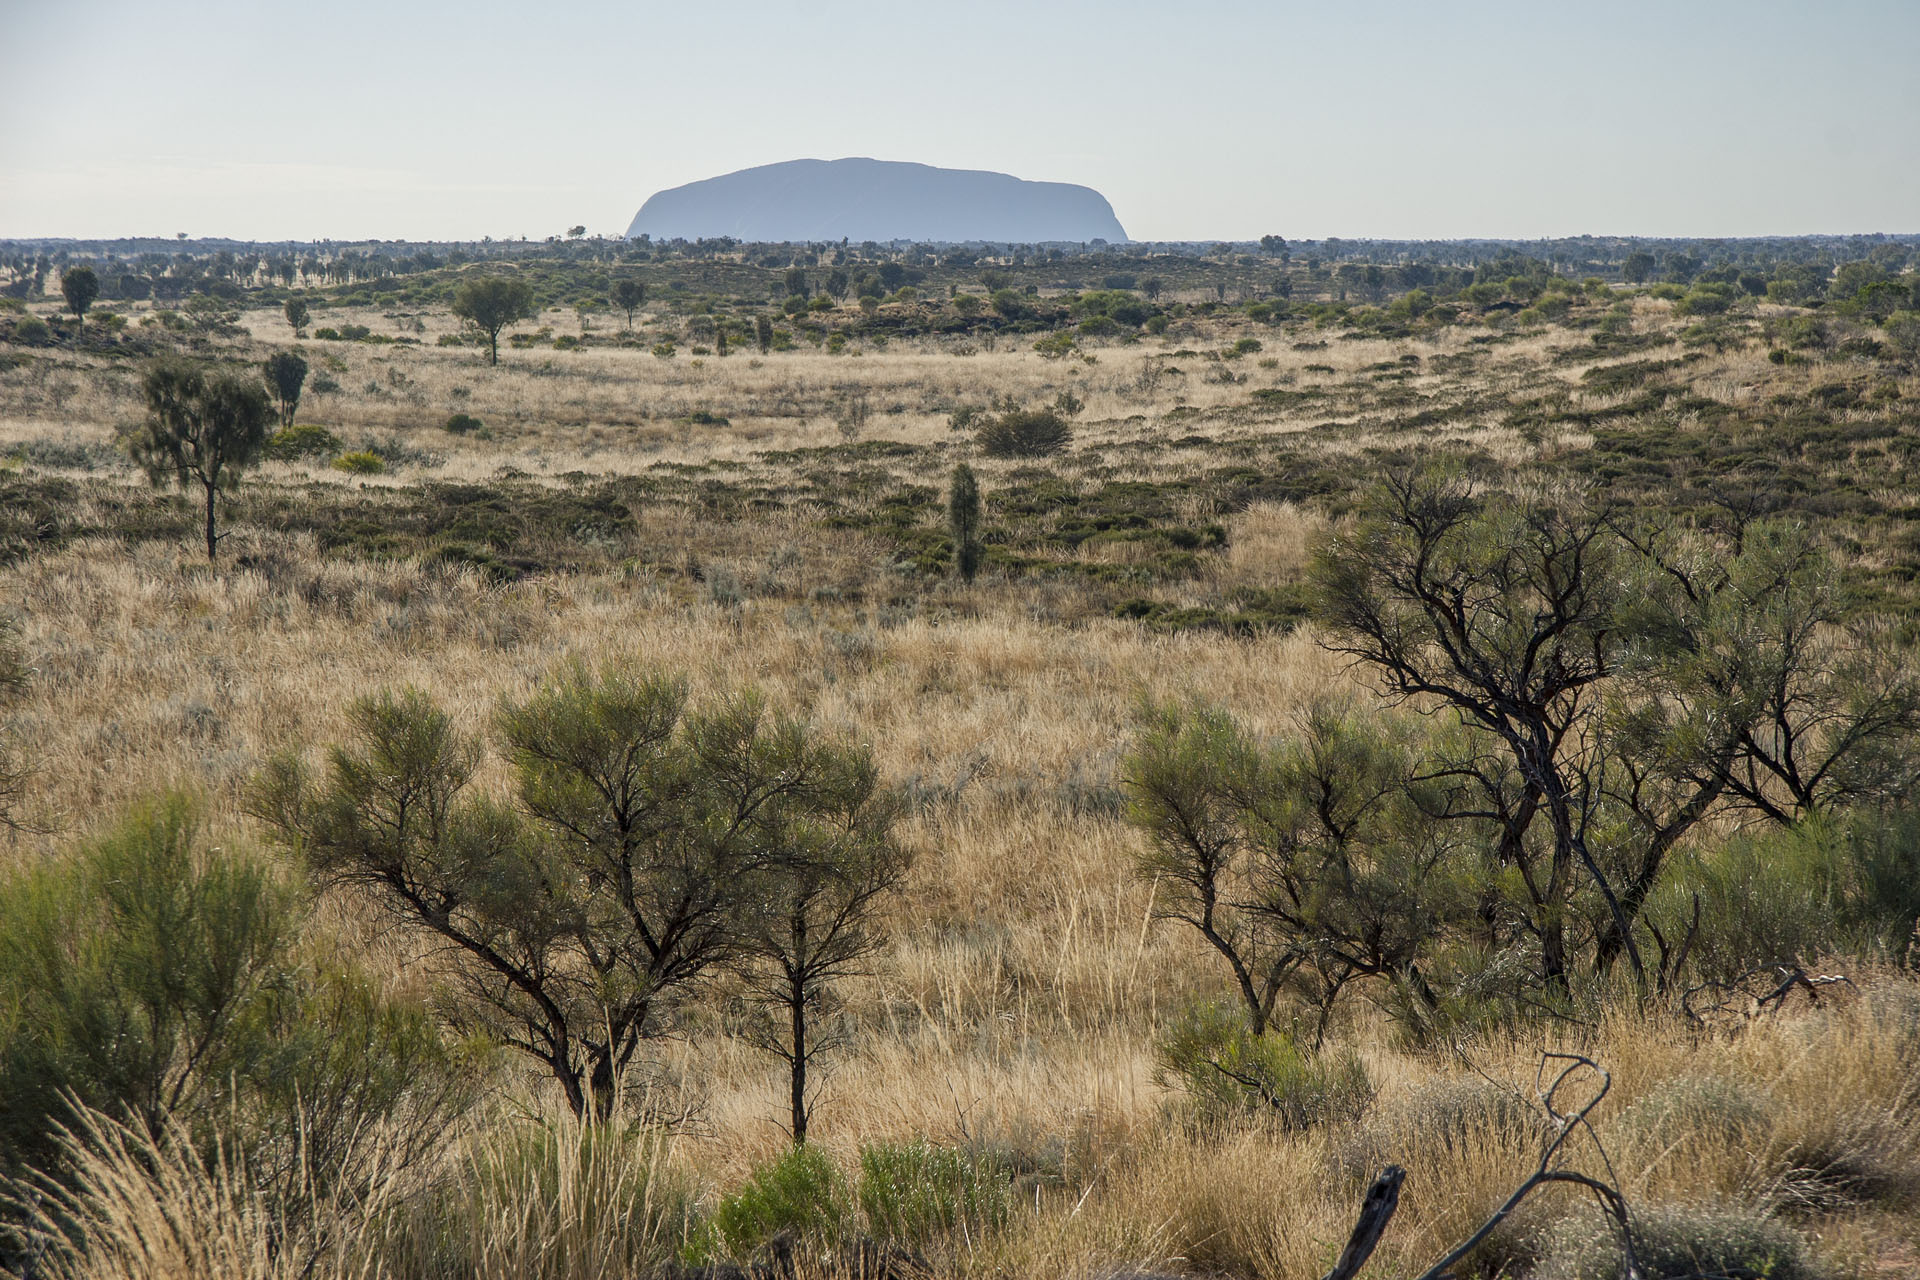 Last glance at the Uluru.